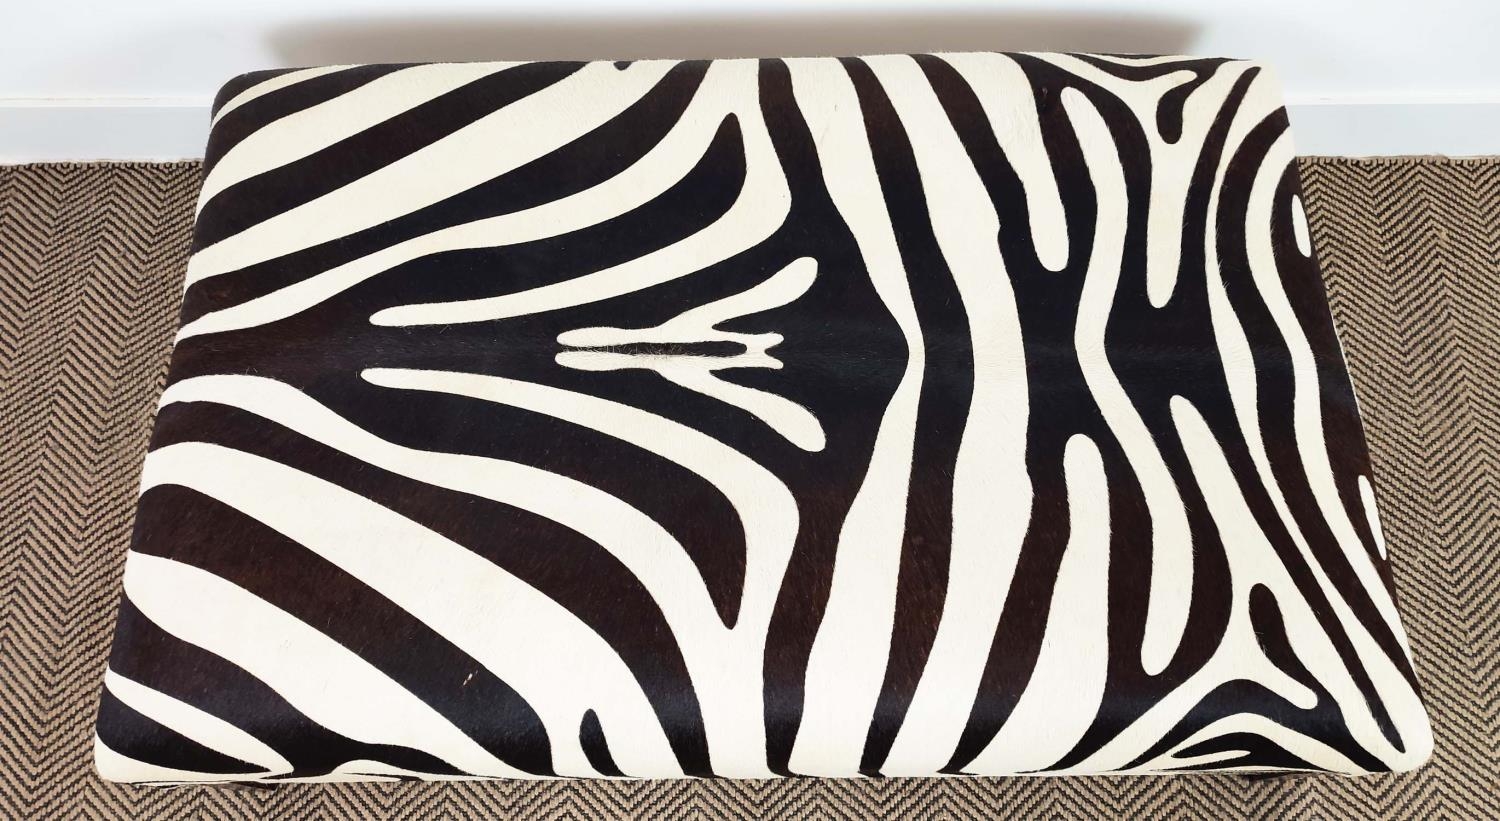 HEARTH STOOL, rectangular zebra skin on ebonised legs, 40cm H x 120cm x 76cm. - Image 10 of 14